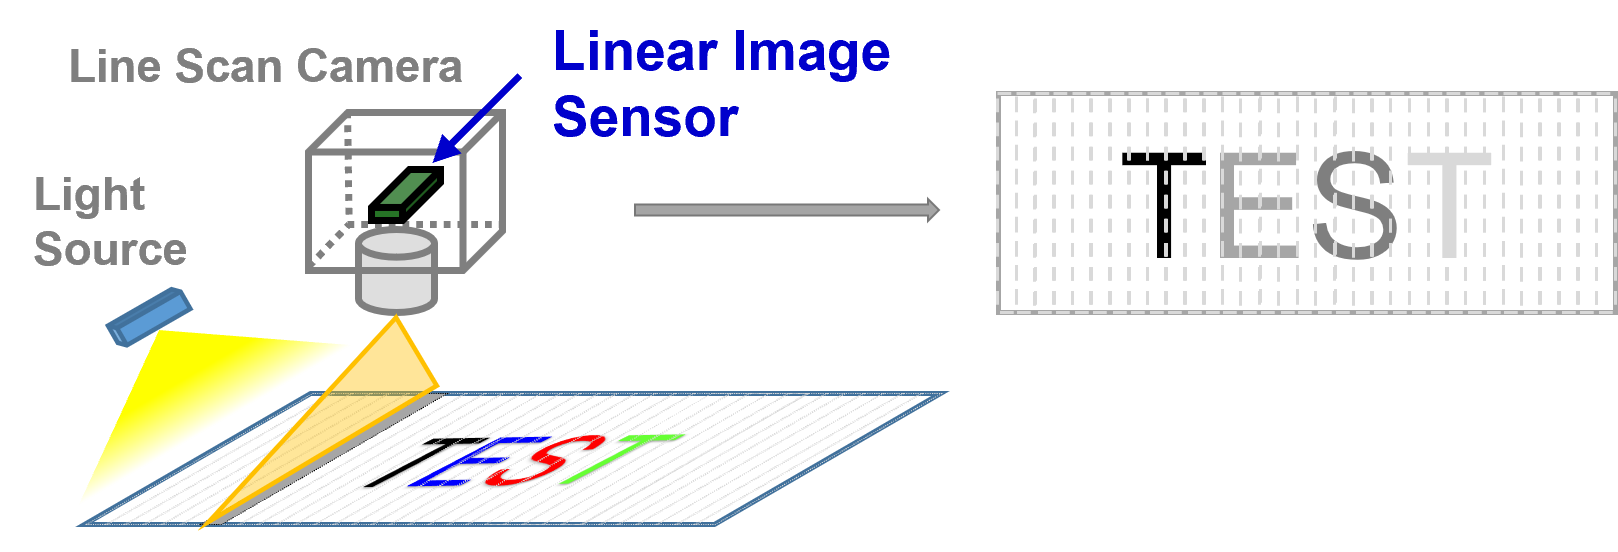 Linear Image Sensor